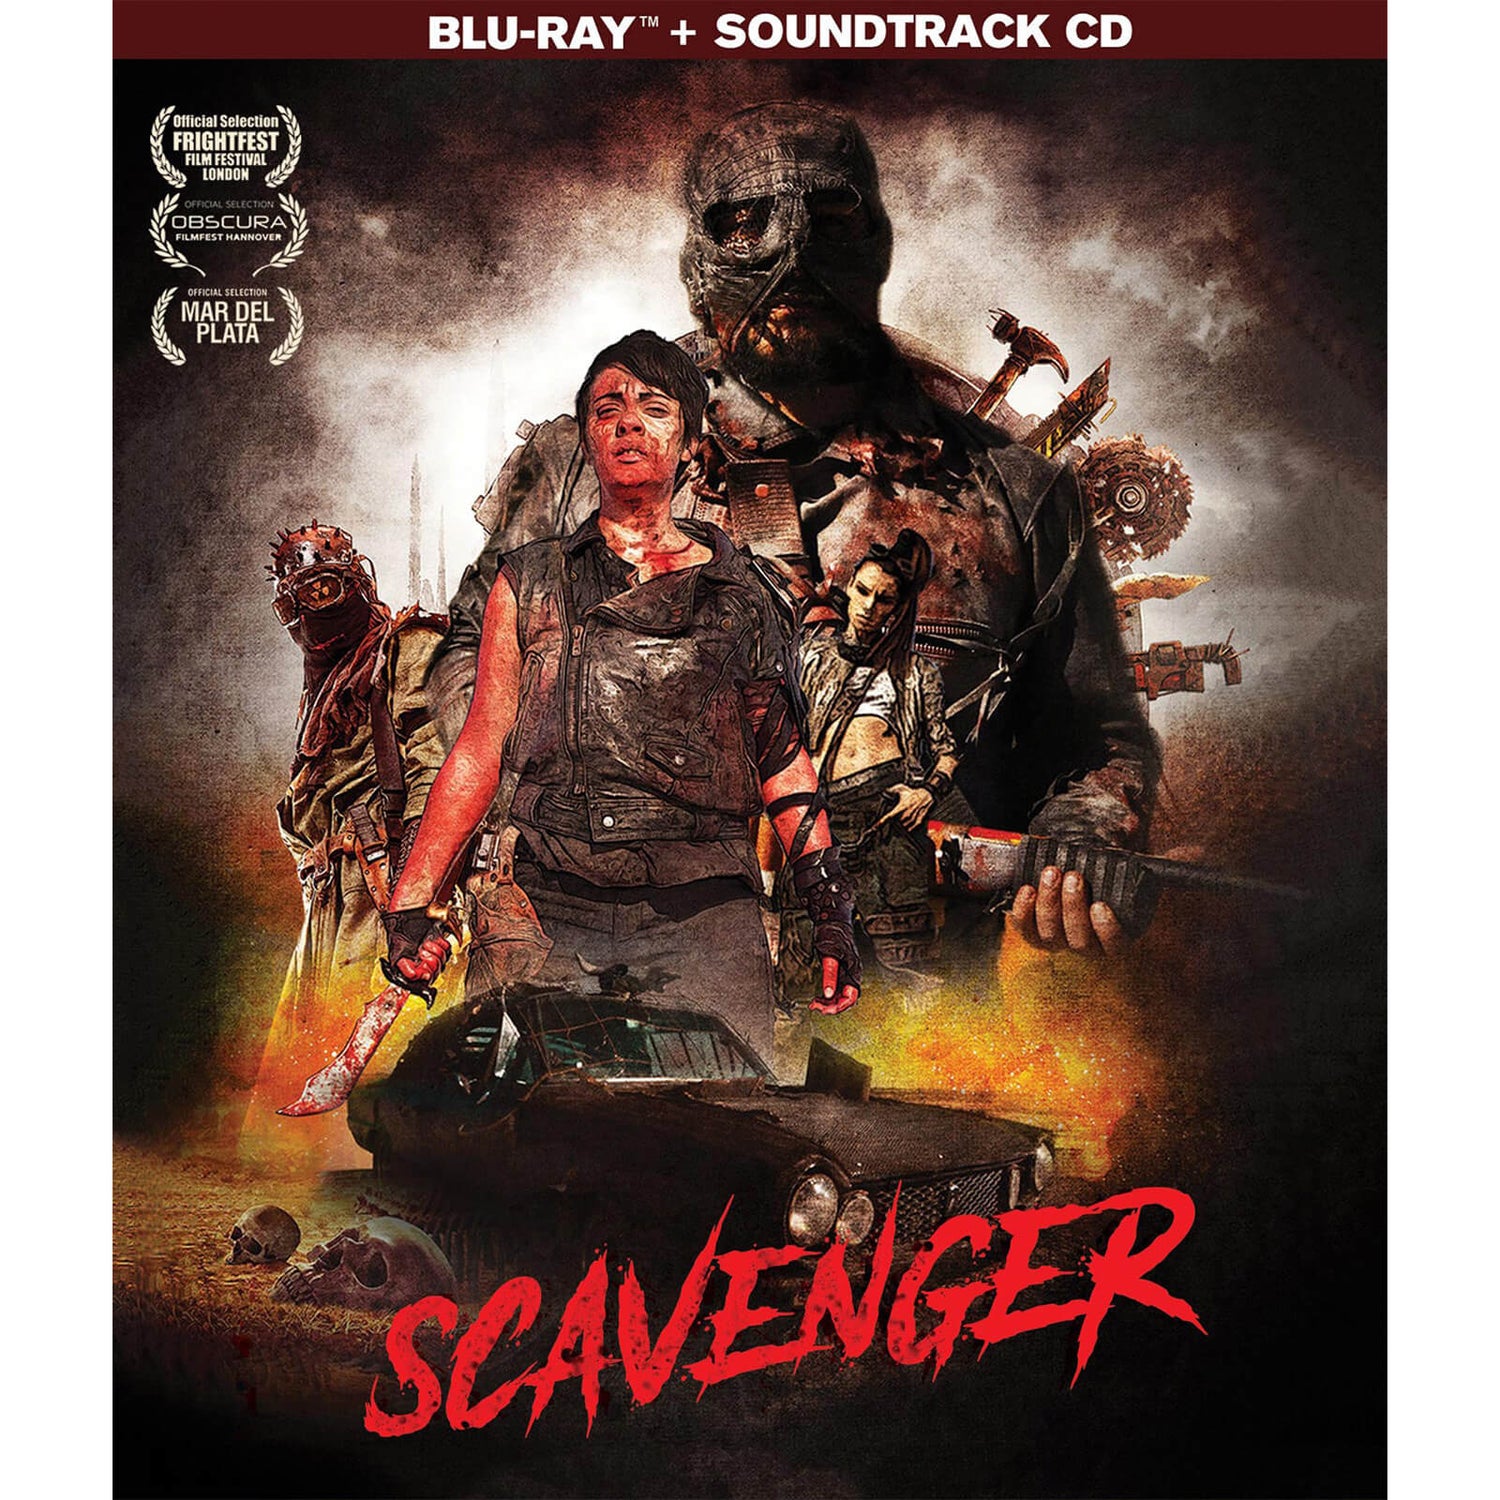 Scavenger (Includes CD)